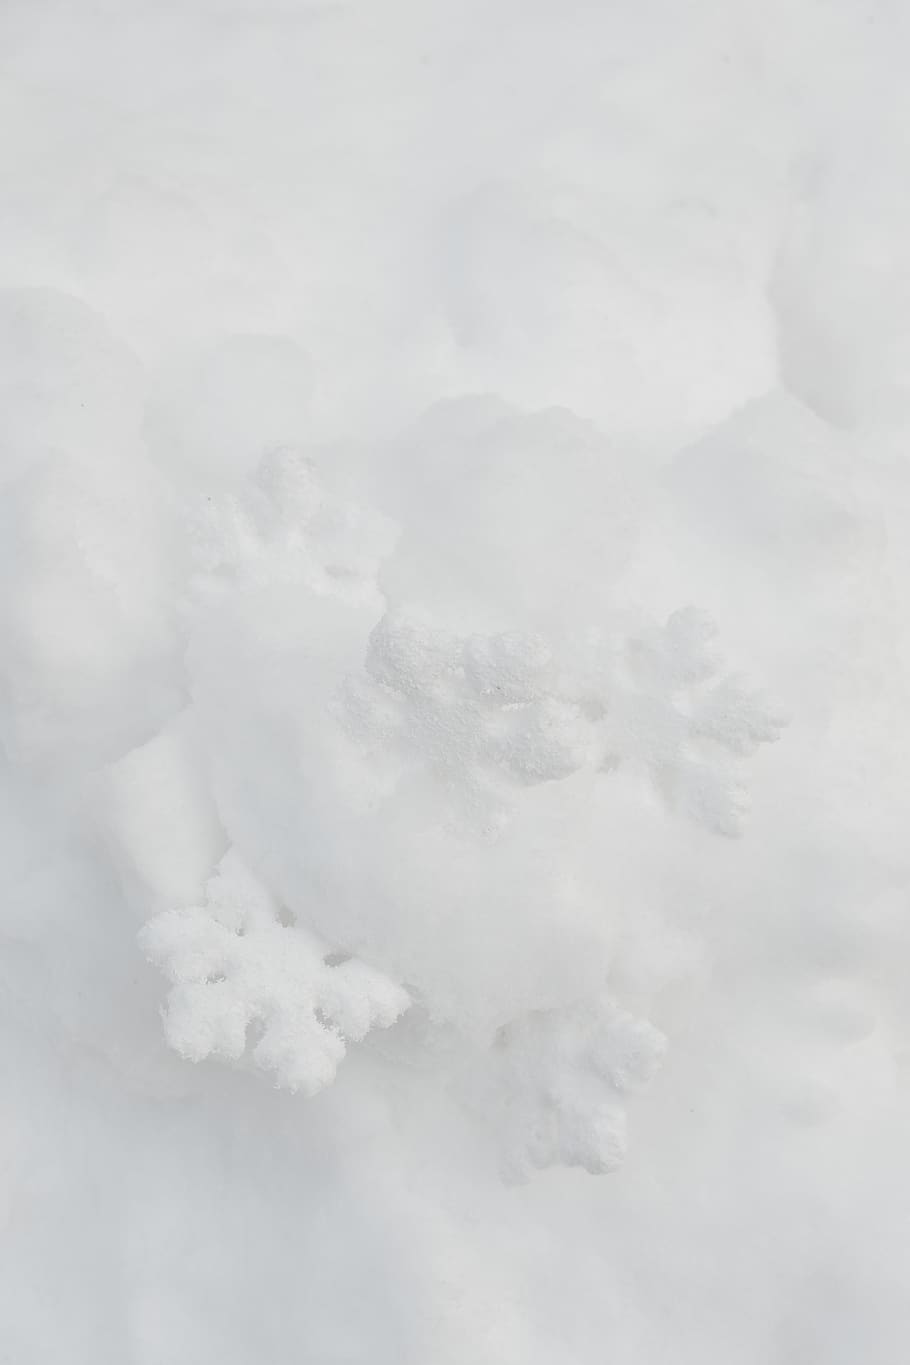 kepingan salju, dekorasi, salju, putih, minimal, musim dingin, dekoratif, segar, warna putih, latar belakang